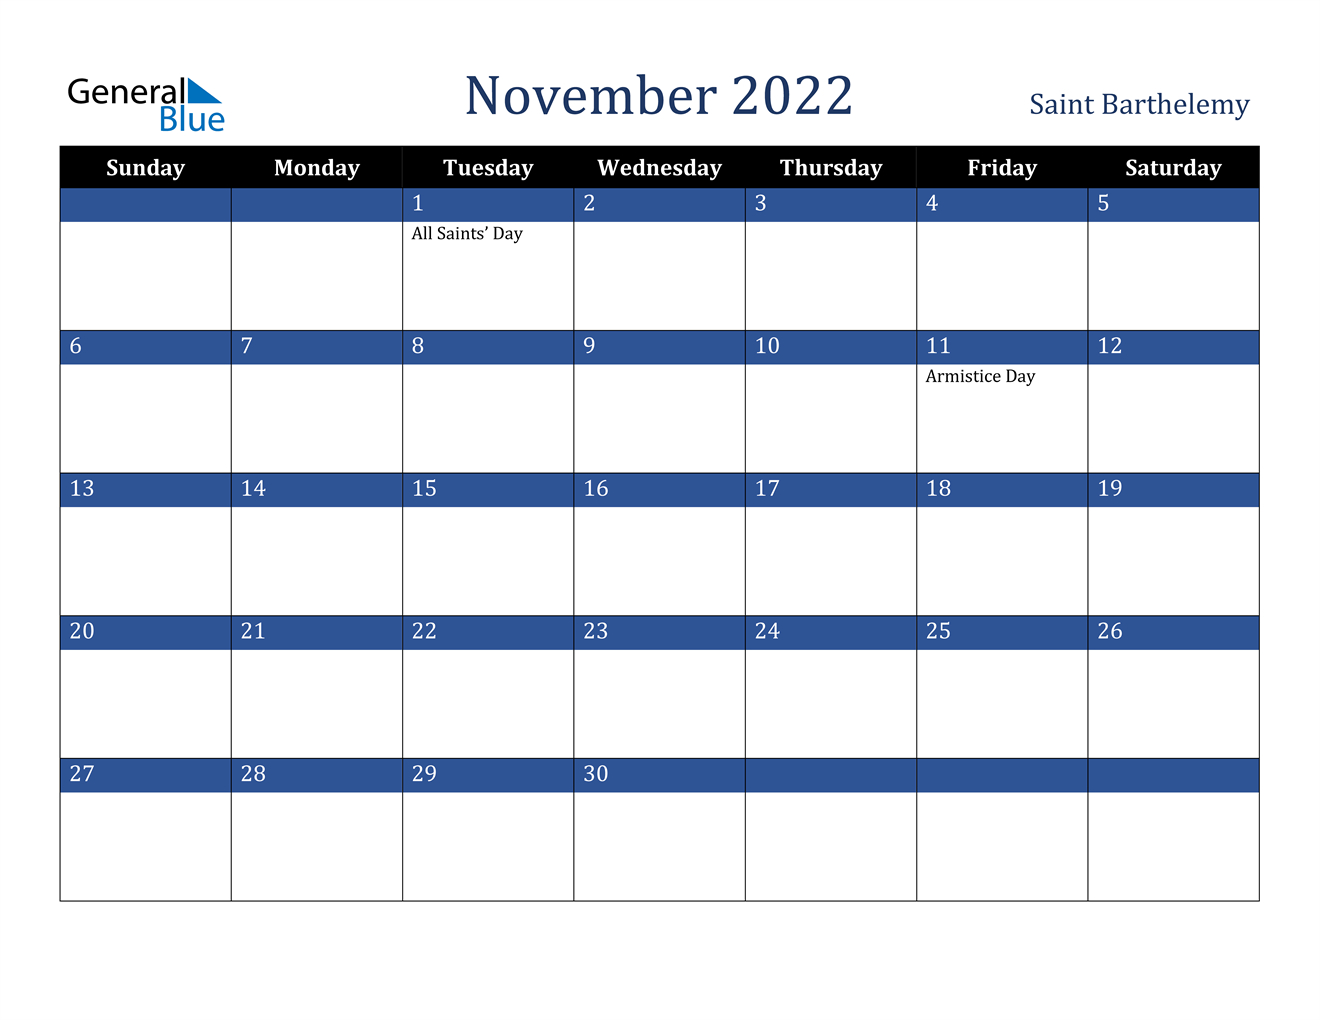 November 2022 Calendar - Saint Barthelemy